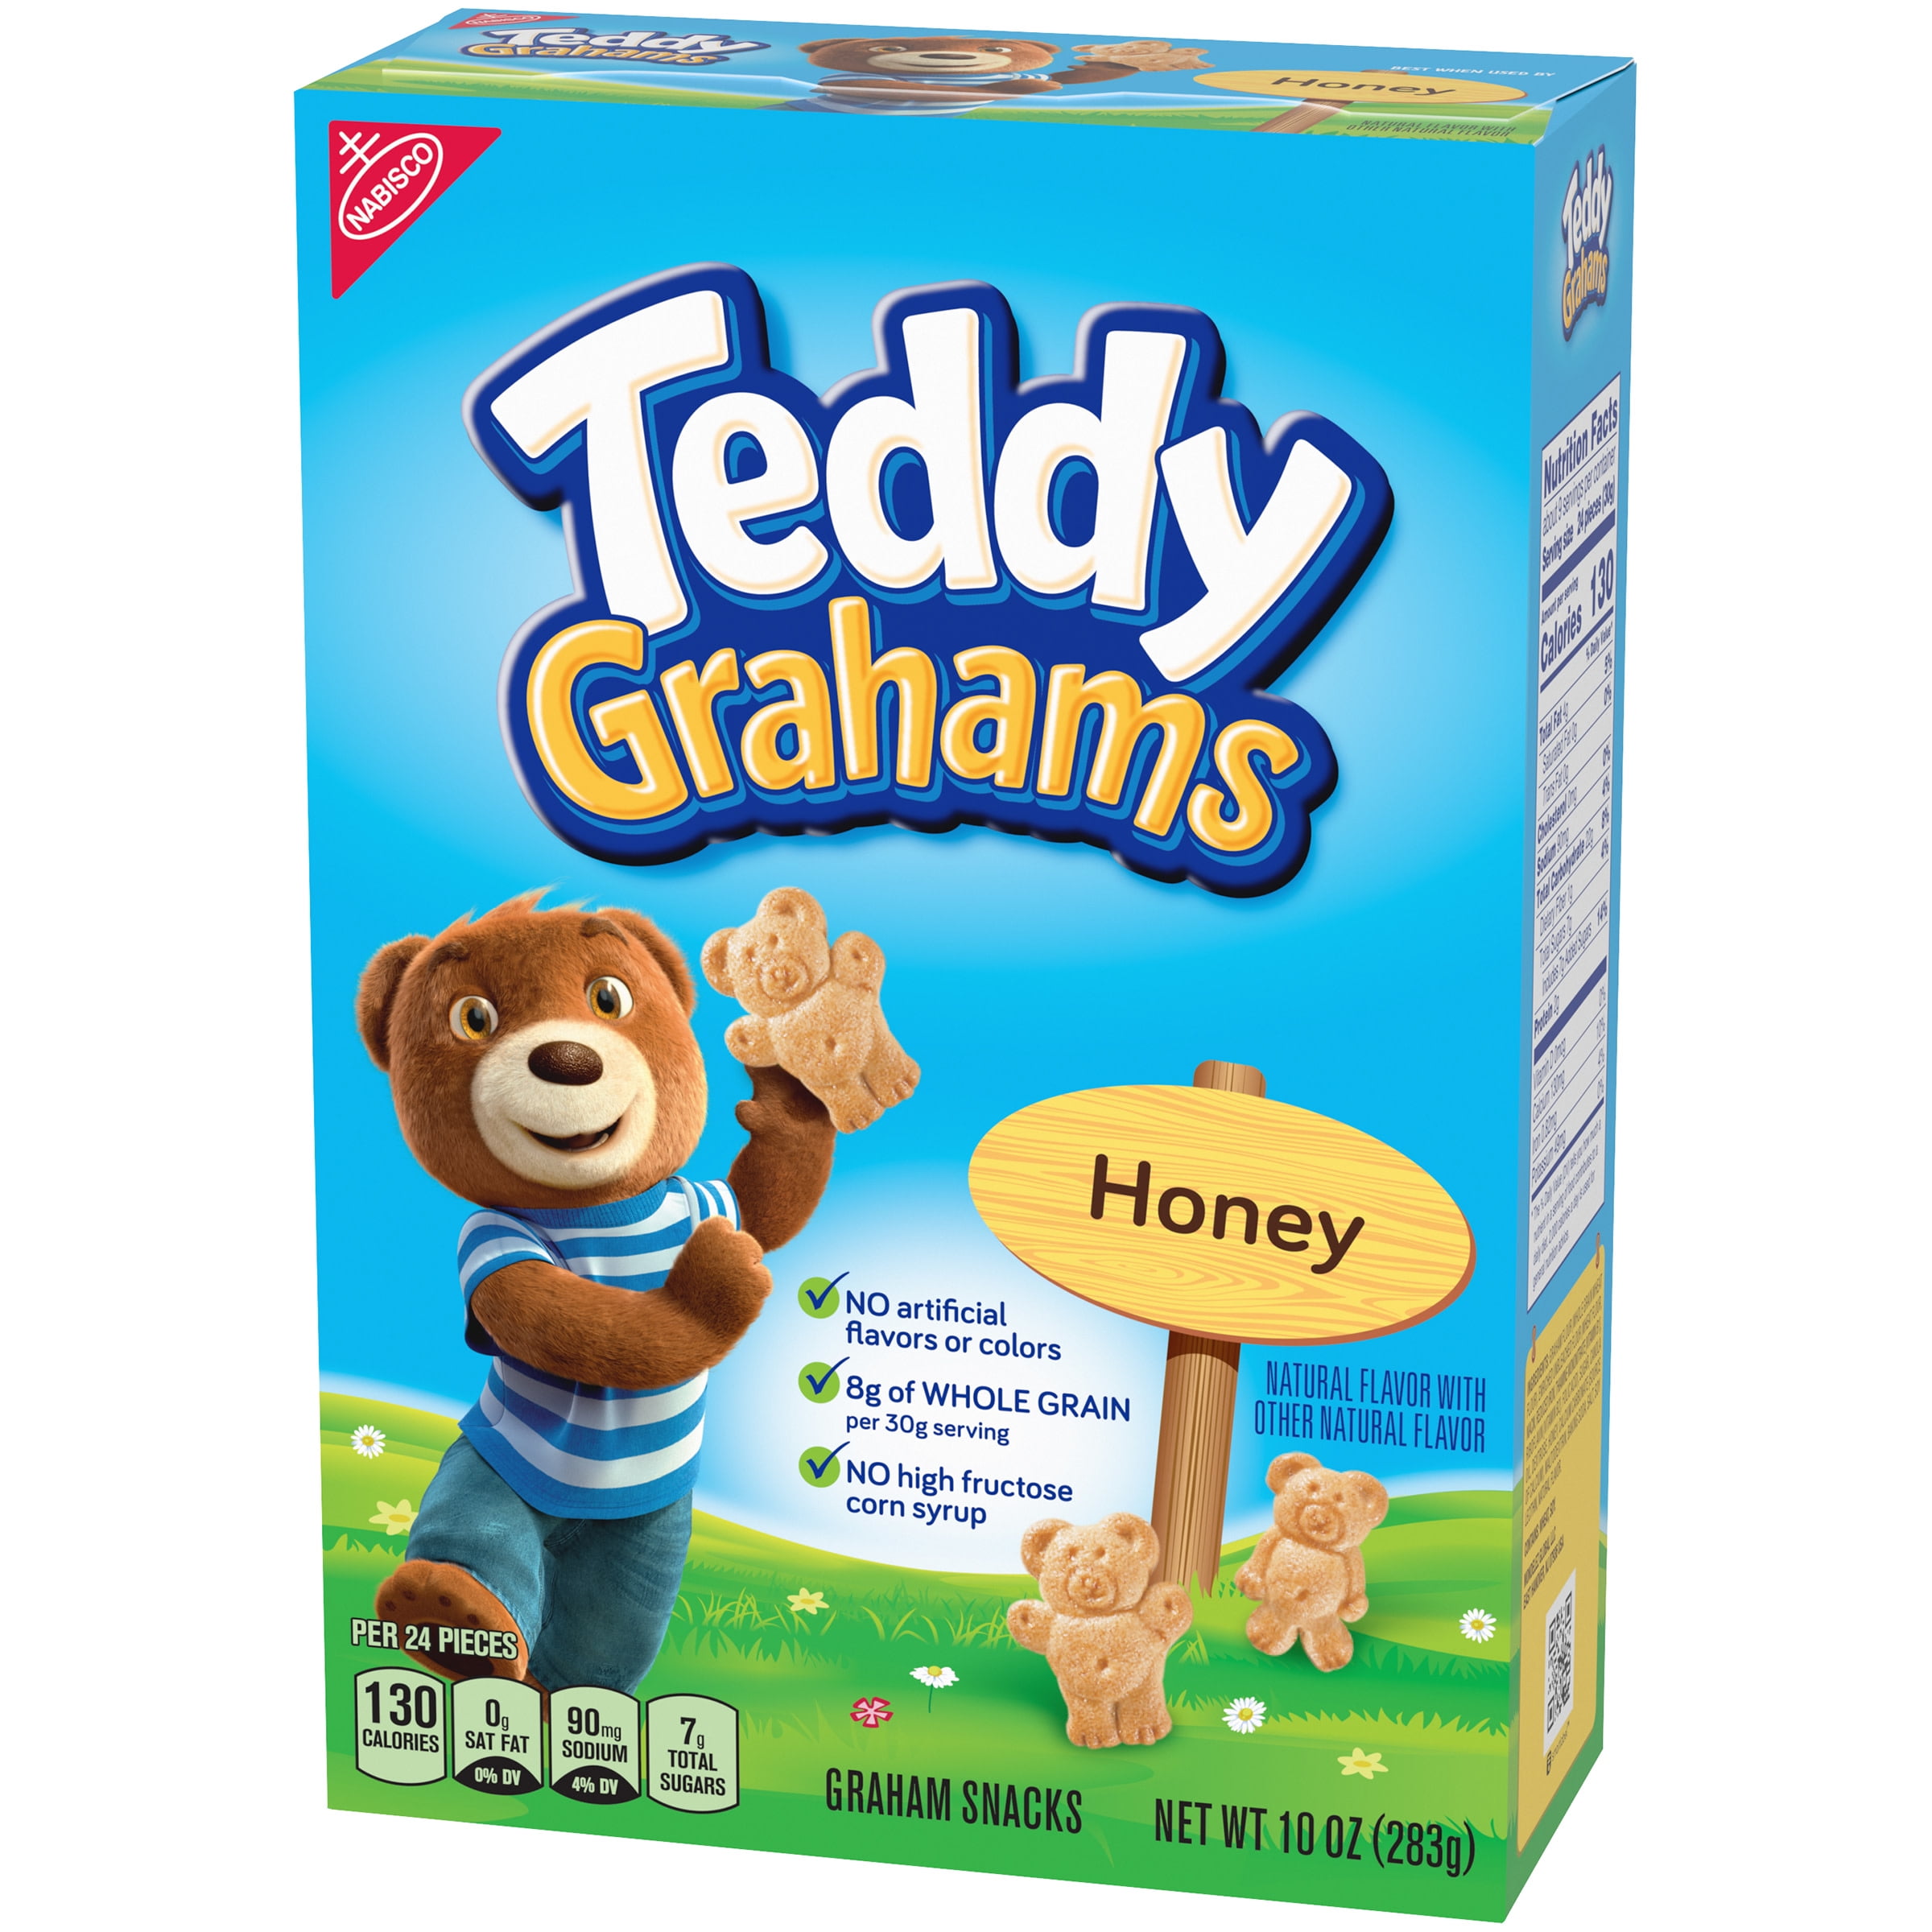 teddy bear gram